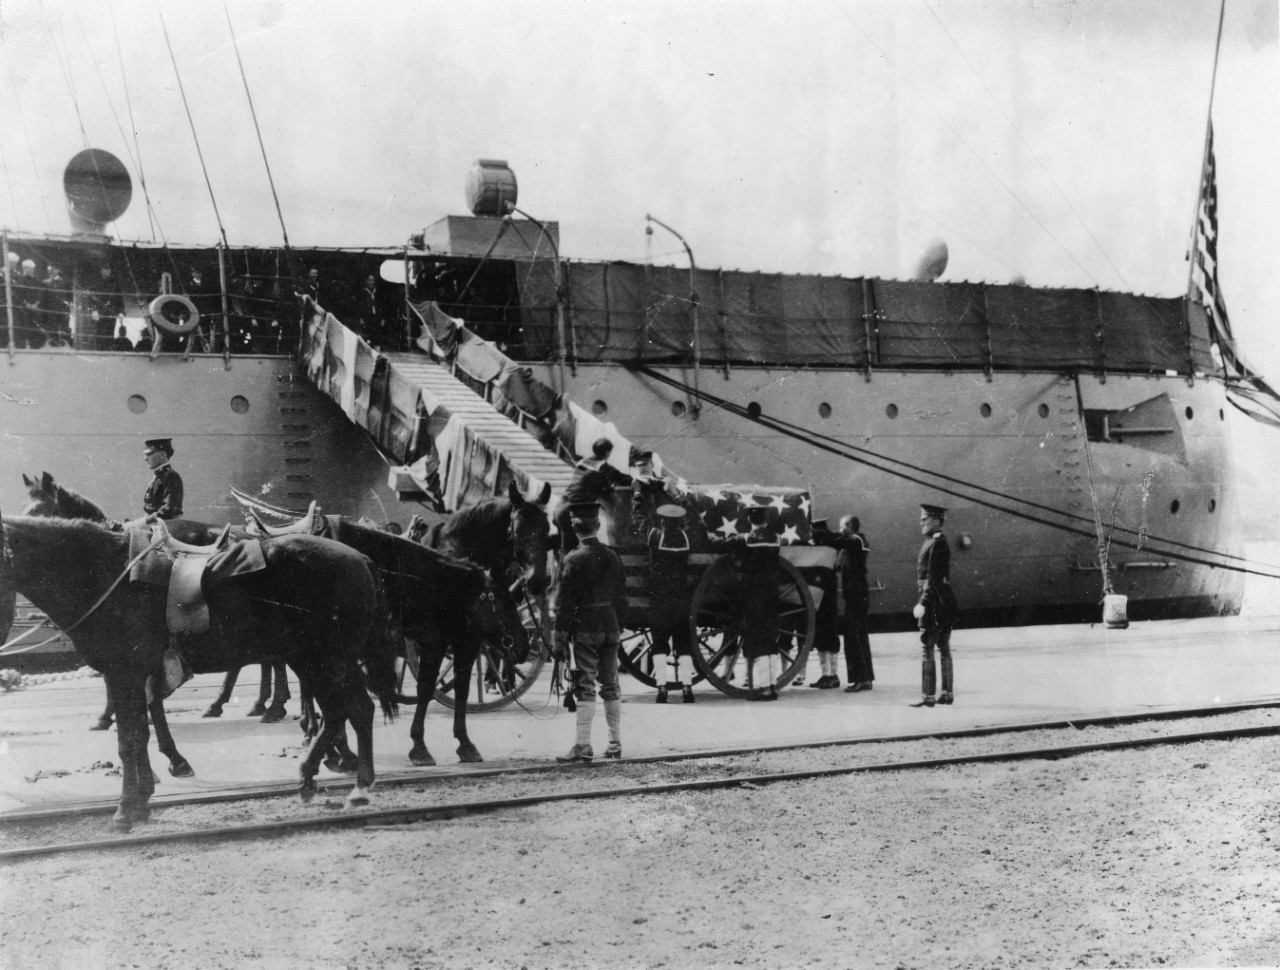 Repatriation of USS Maine victims, 1912